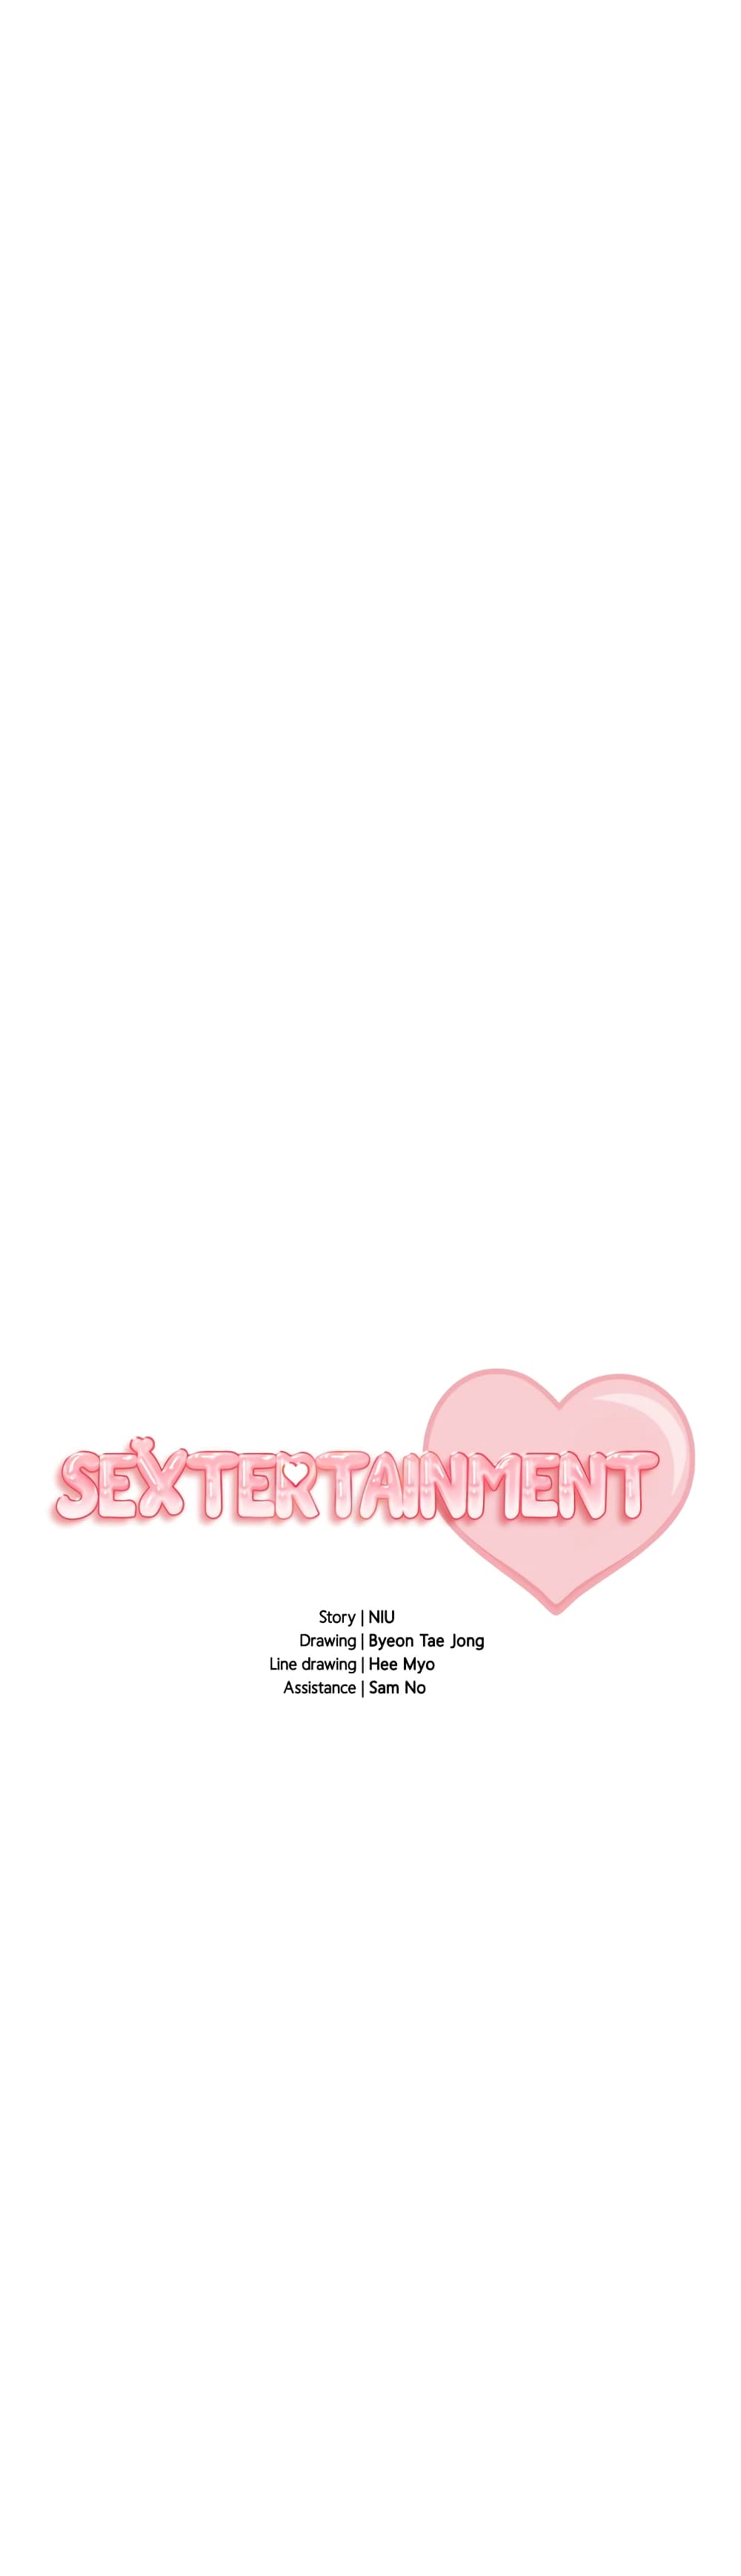 Sextertainment 12 01